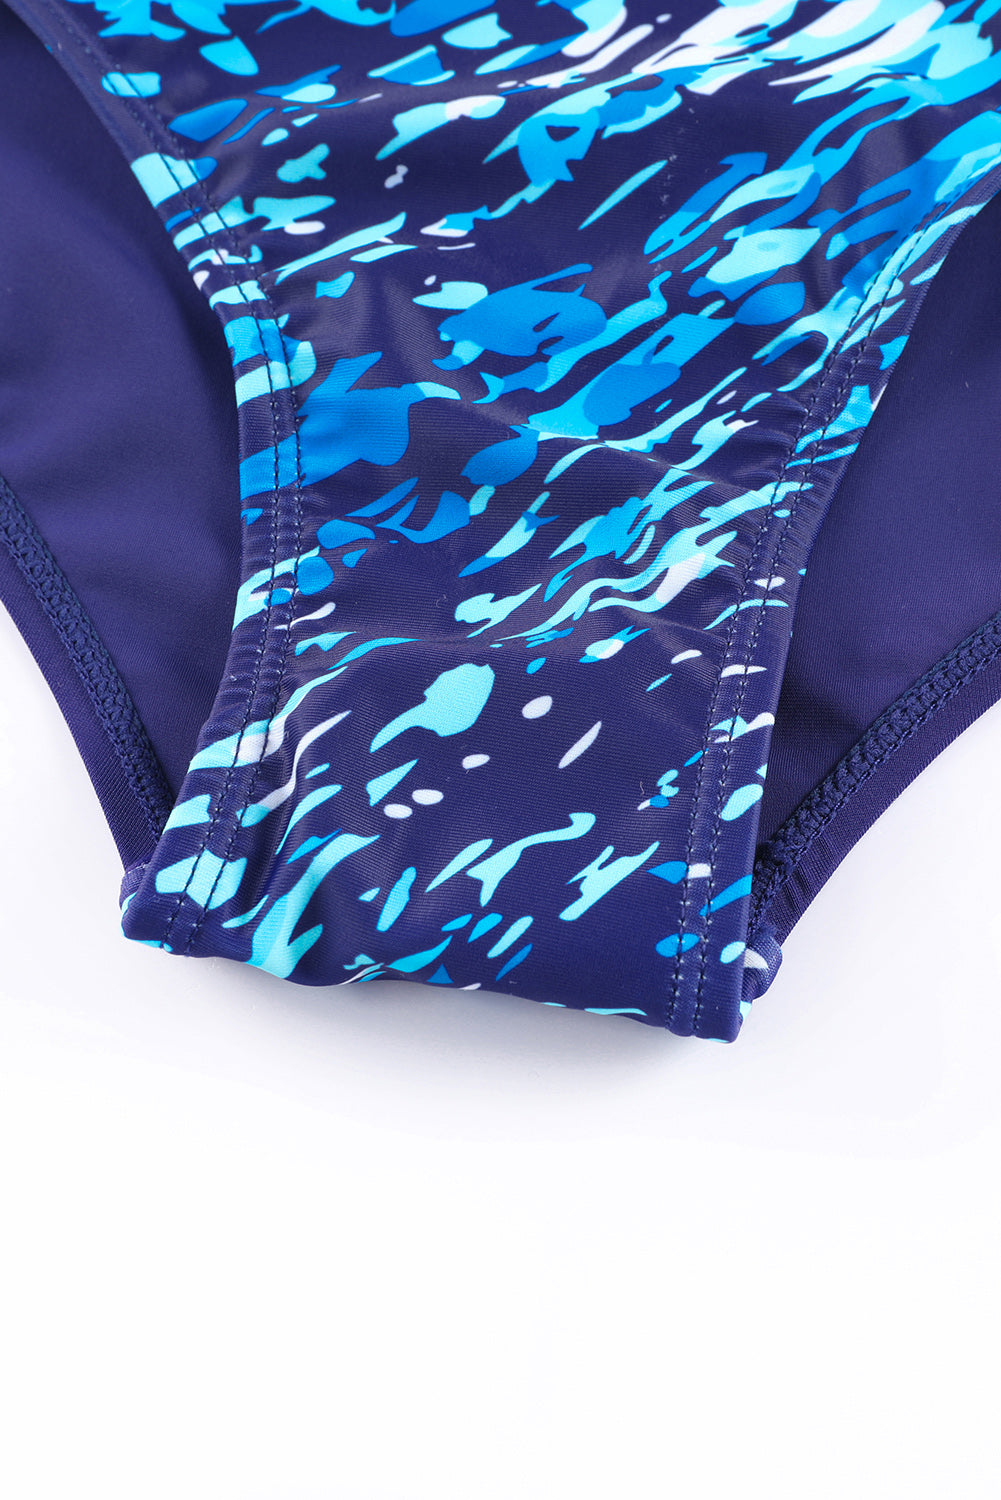 LC443354-105-S, LC443354-105-M, LC443354-105-L, LC443354-105-XL, LC443354-105-2XL, Blue Women One Piece Swimsuit Striped Pattern Print Sleeveless Bathing Suit